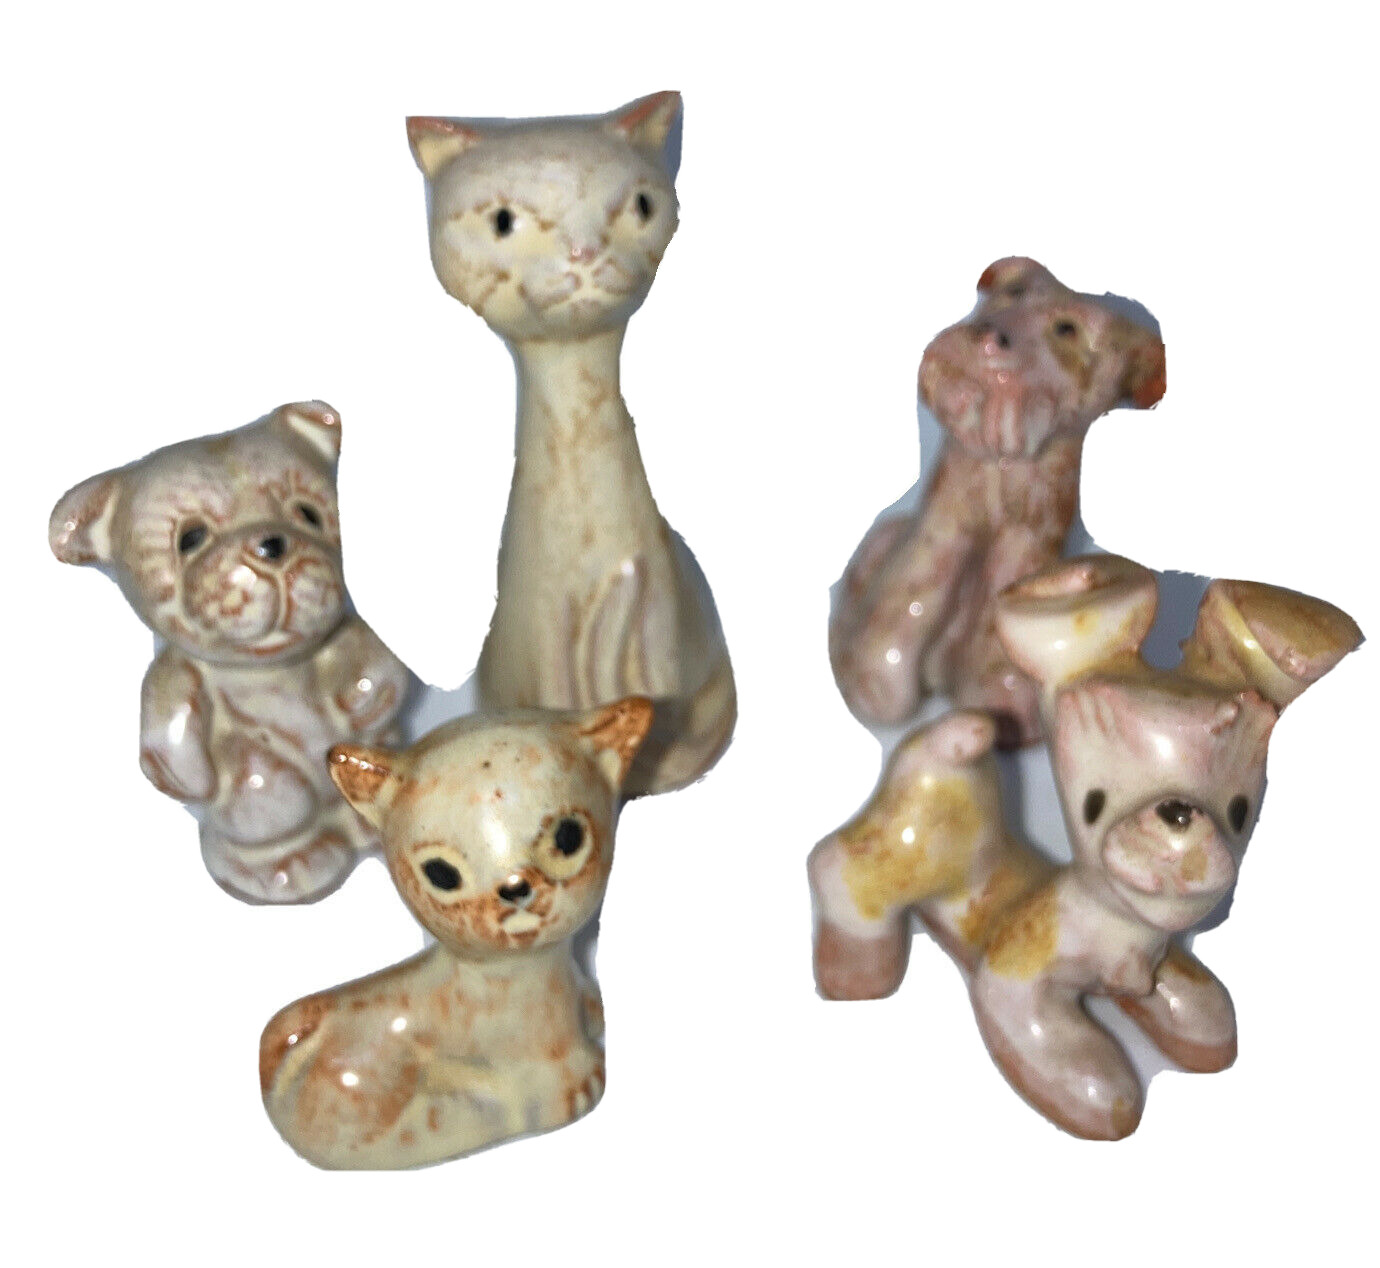 Kupittaan Savi 1950s Finland Svante Turunen 5 mini figurine cat dog bear ceramic